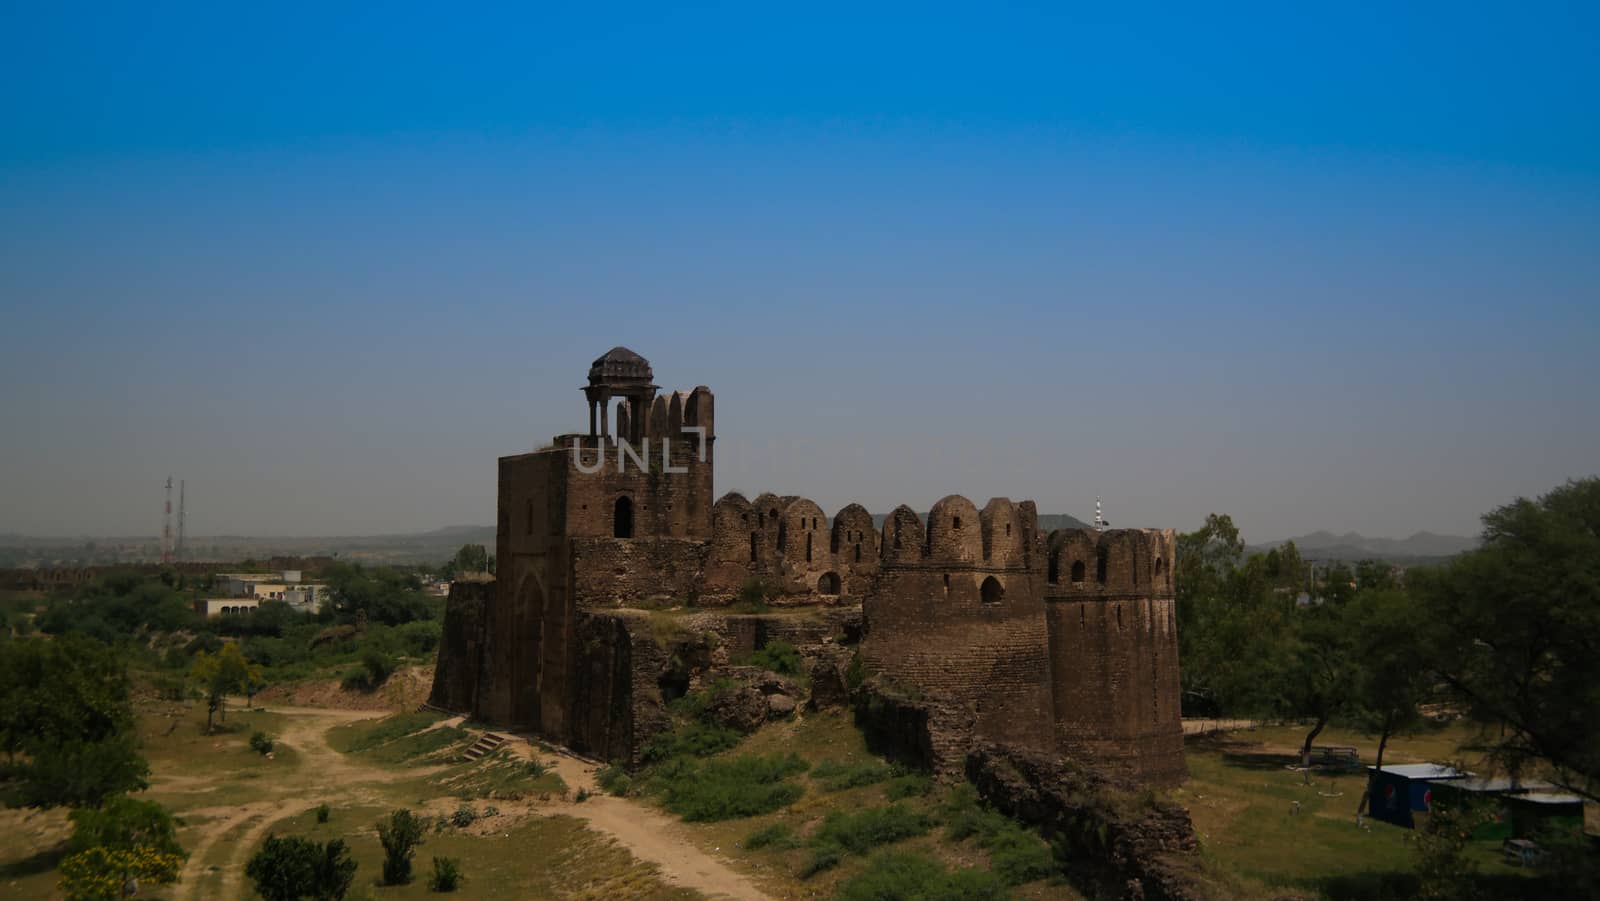 Panorama of Rohtas fortress, Punjab, Pakistan by homocosmicos